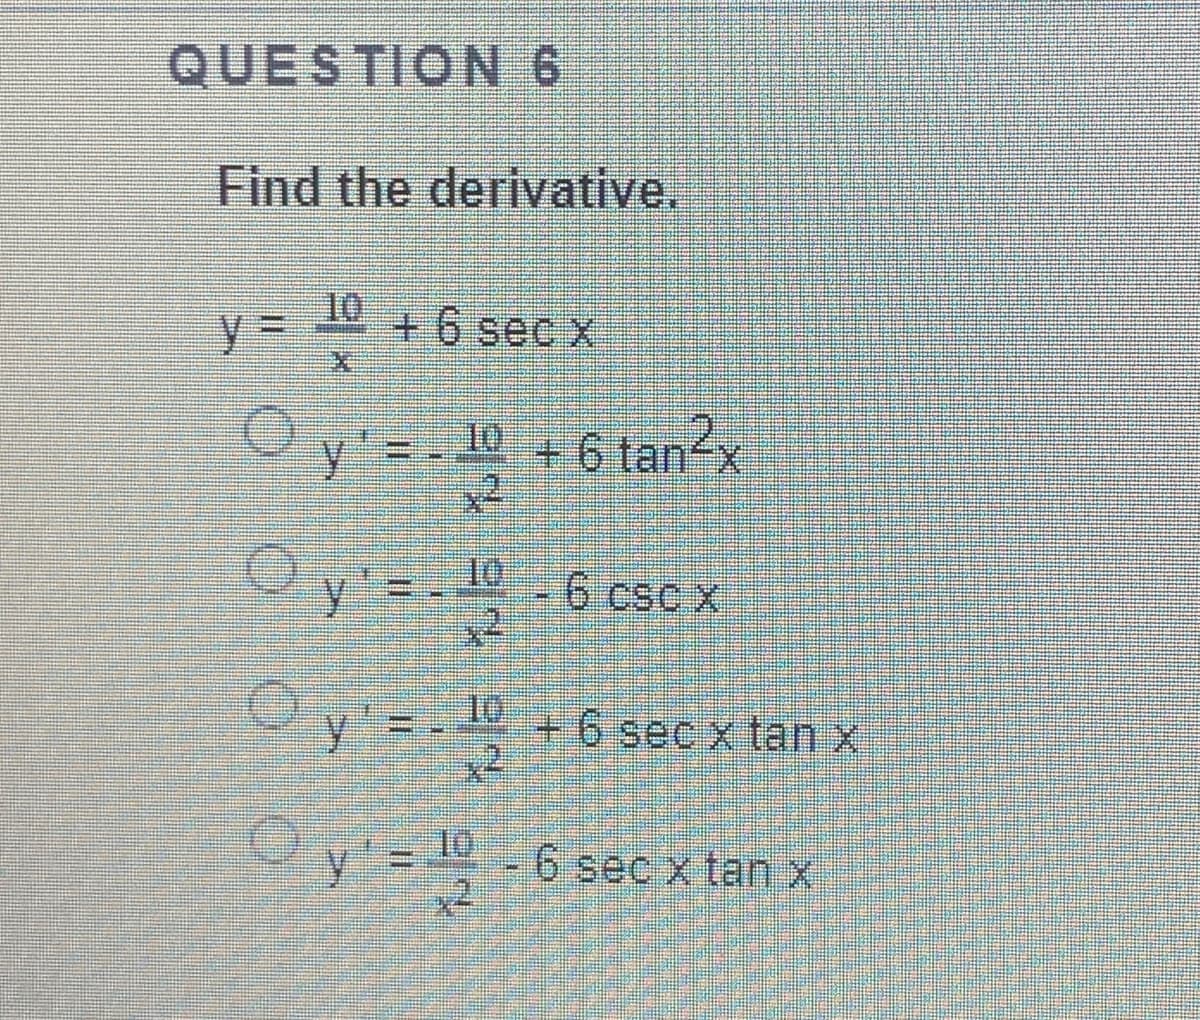 QUESTION 6
Find the derivative,
10
+6 sec x
Oy = - 10 +6 tan2x
tan²x
O y'=- 6 cscx
10
6 cso
Oy =- 10
+6 sec x tan x
y' = D
6 sec x tanx
